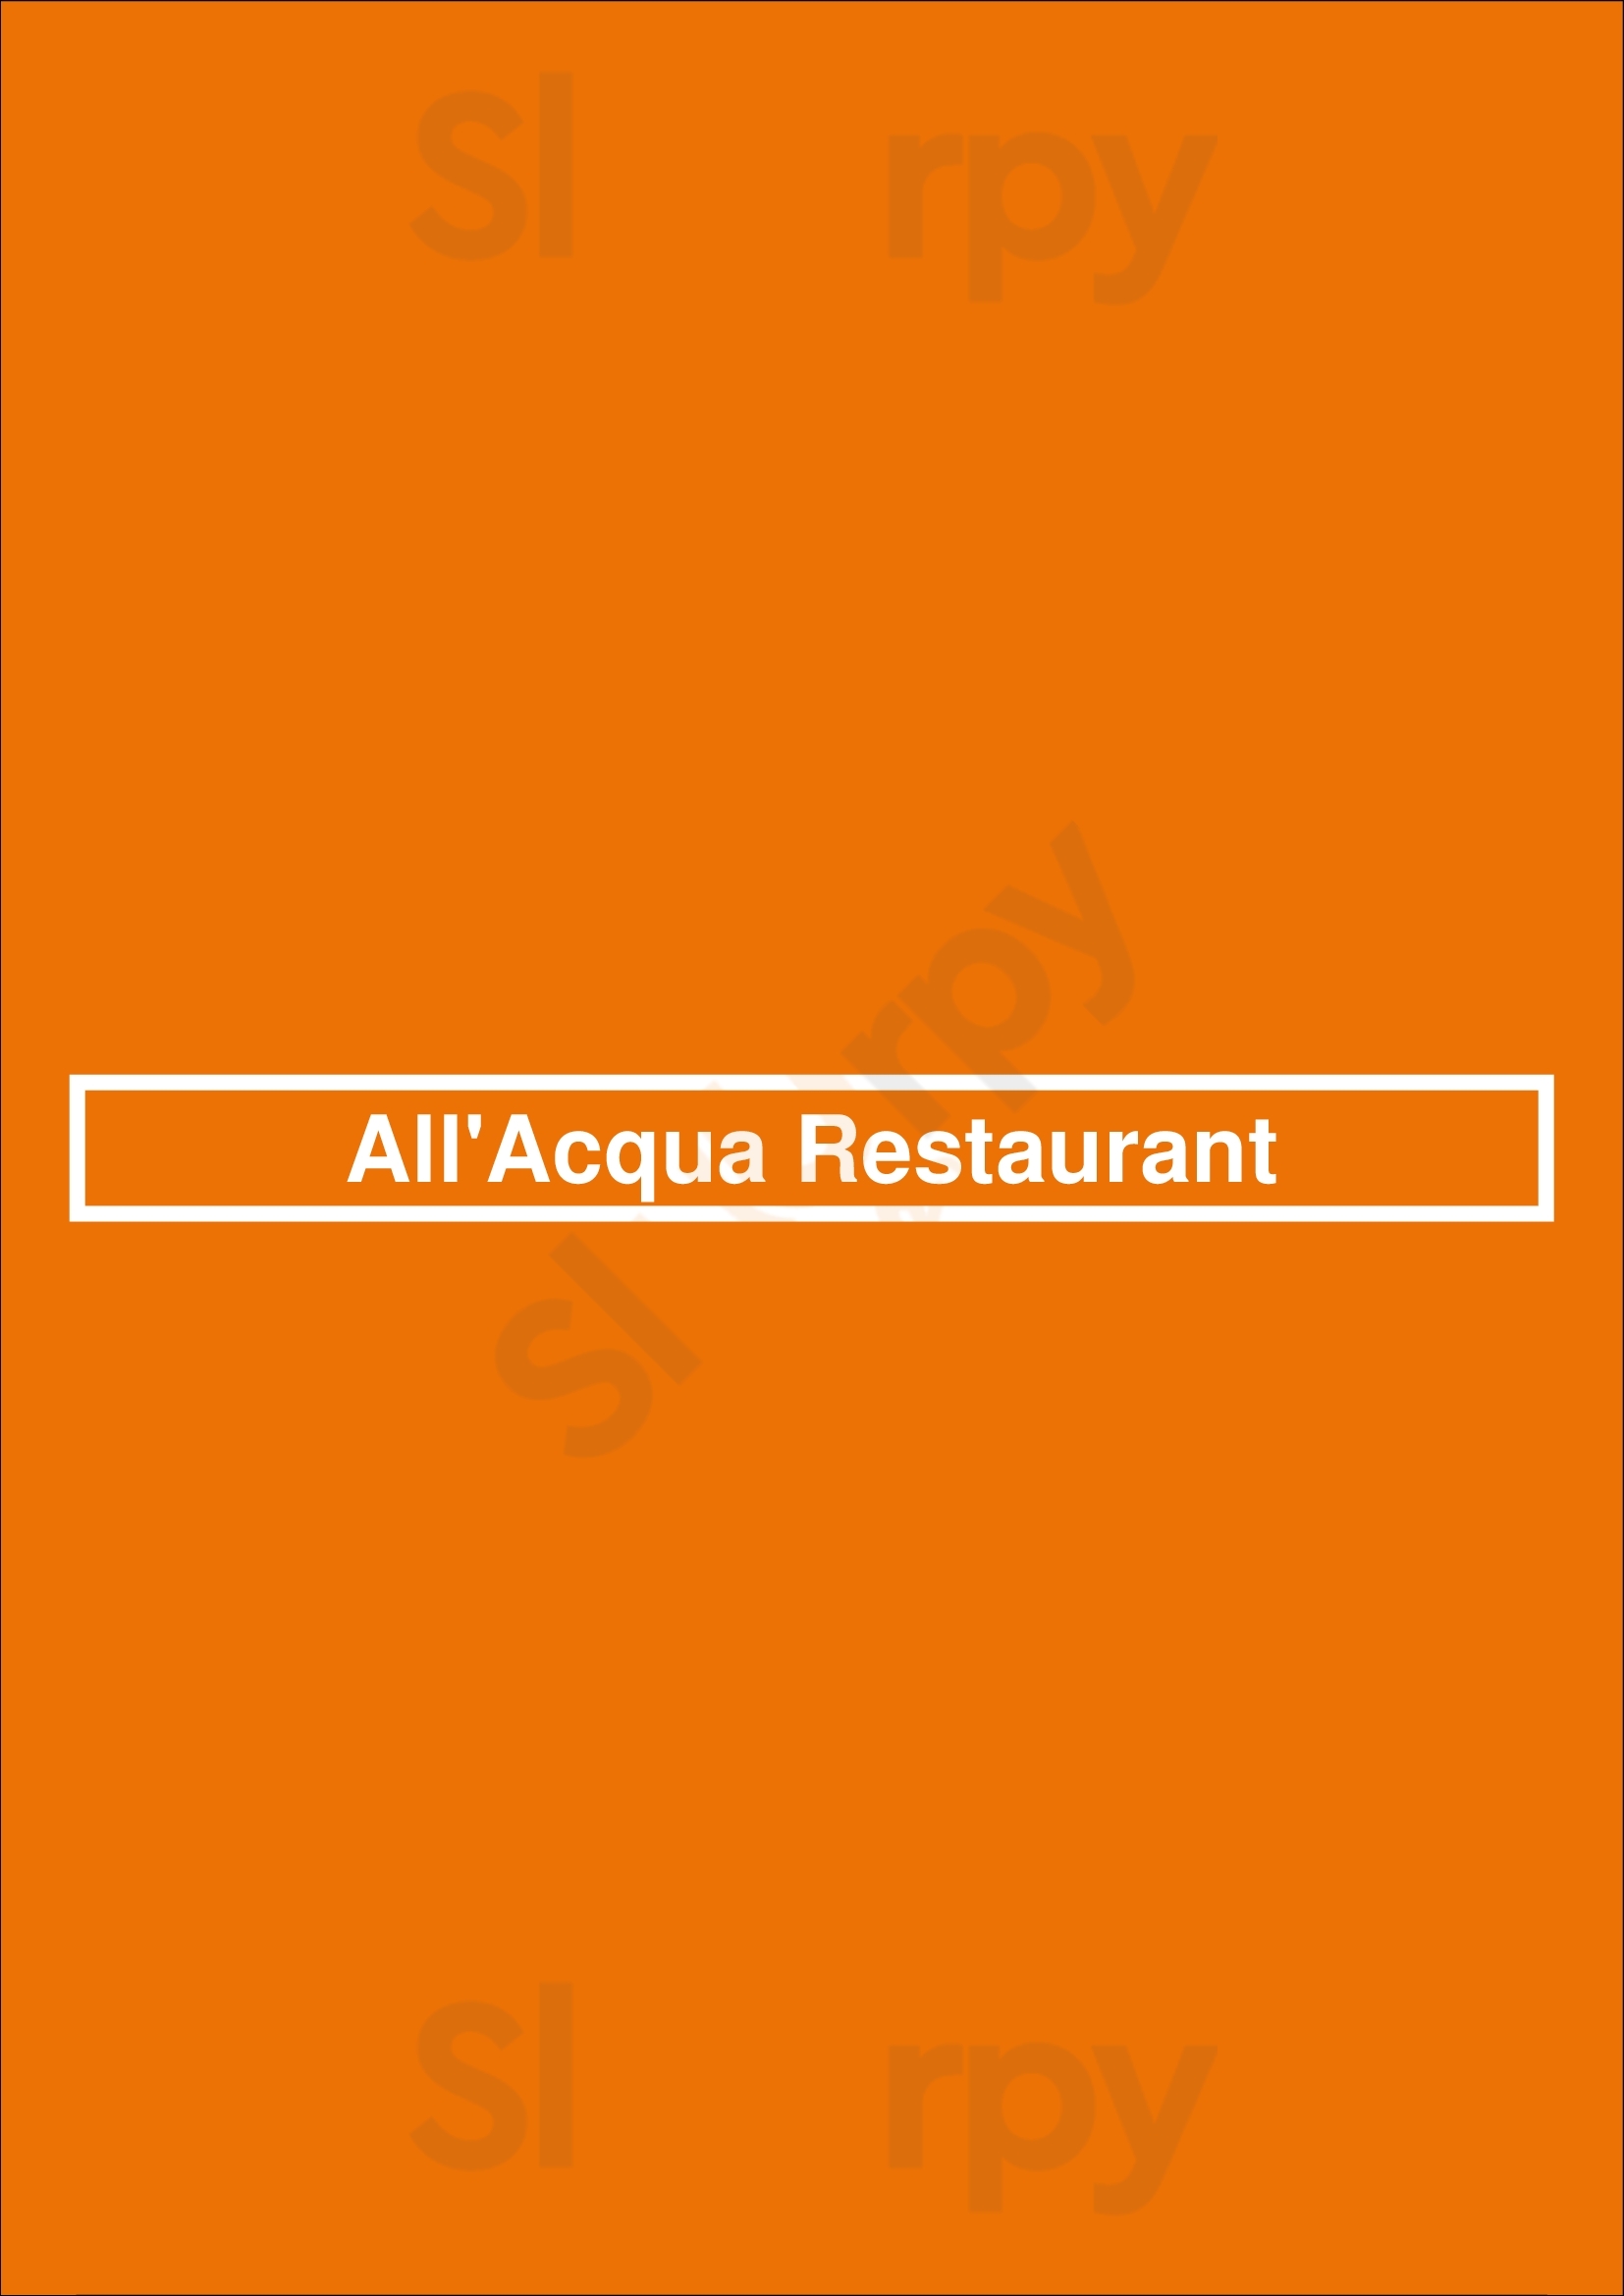 All'acqua Restaurant Los Angeles Menu - 1